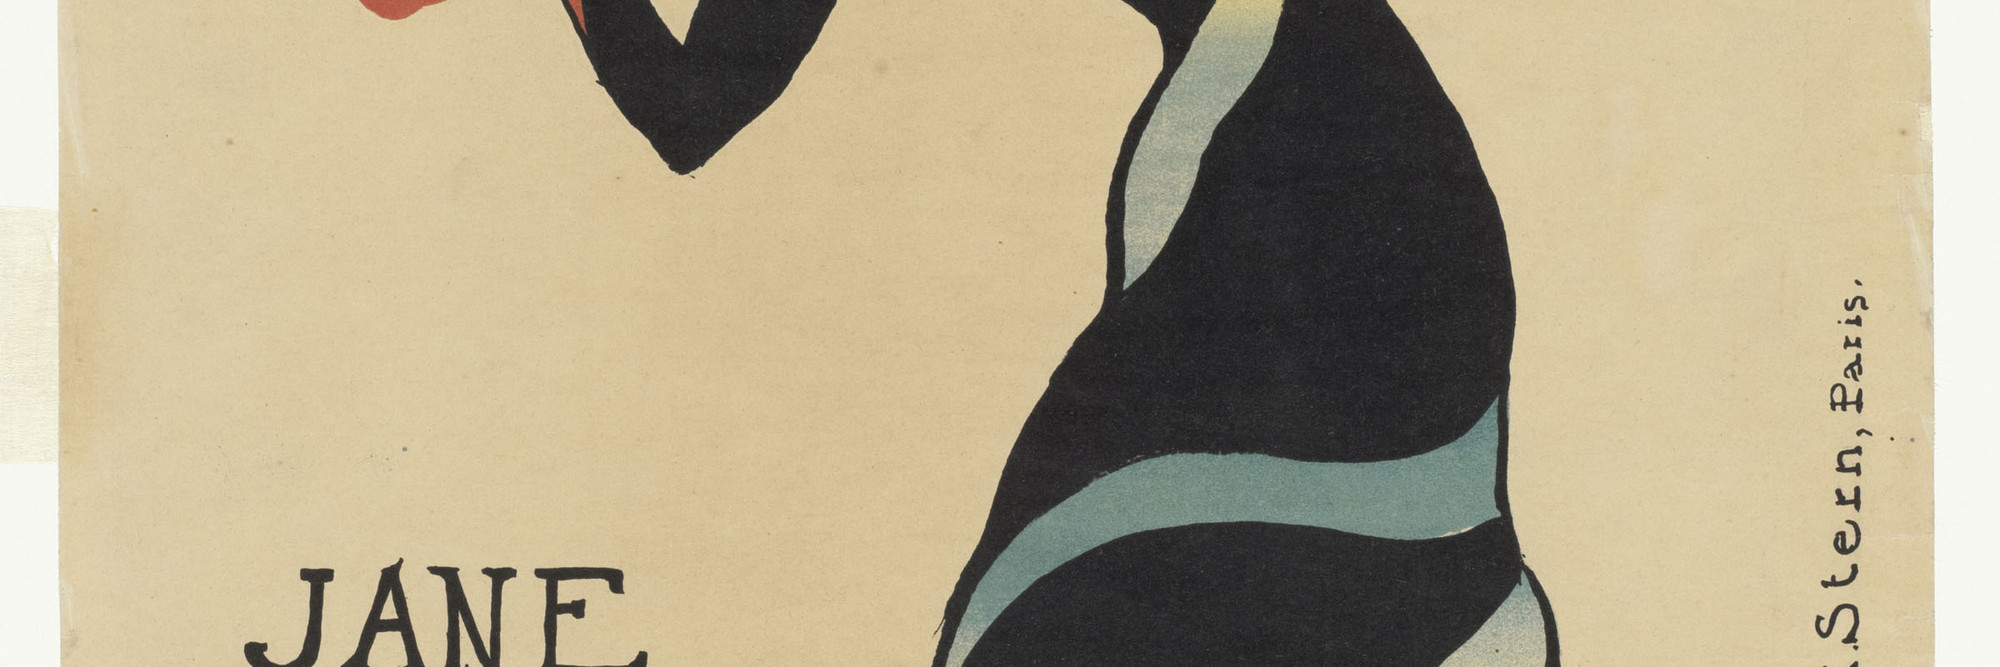 Henri de Toulouse-Lautrec (French, 1864–1901). Jane Avril. 1899. Lithograph, sheet: 22 1/16 × 15″ (56 × 38.1 cm). The Museum of Modern Art, New York. Gift of Abby Aldrich Rockefeller, 1946